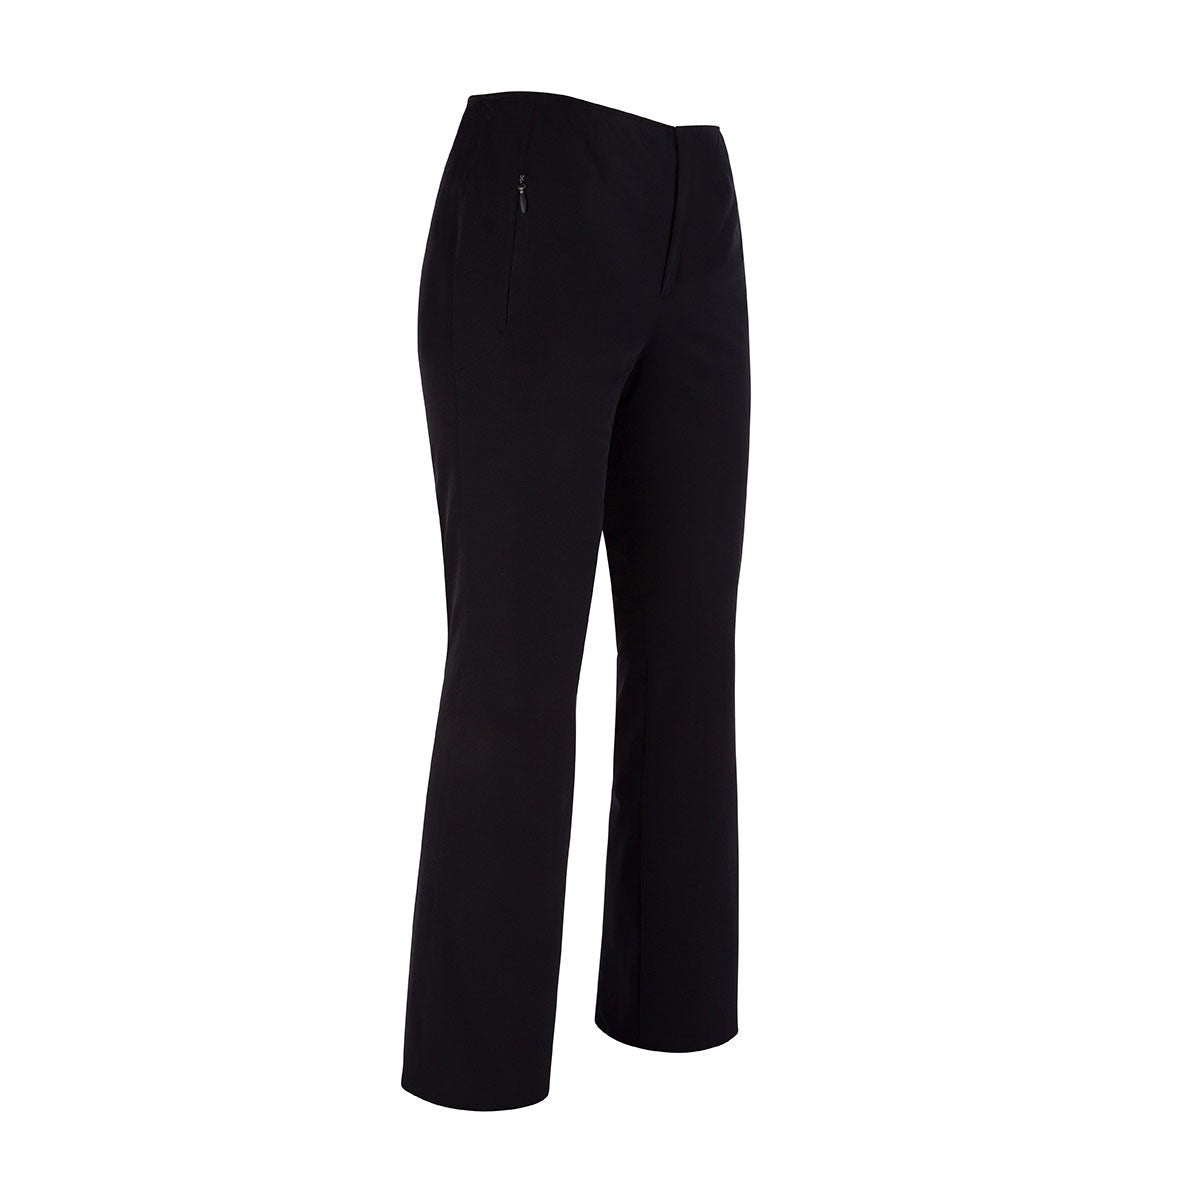 Climate Ski Pants - Black | Women's Ski Clothes | Sweaty Betty